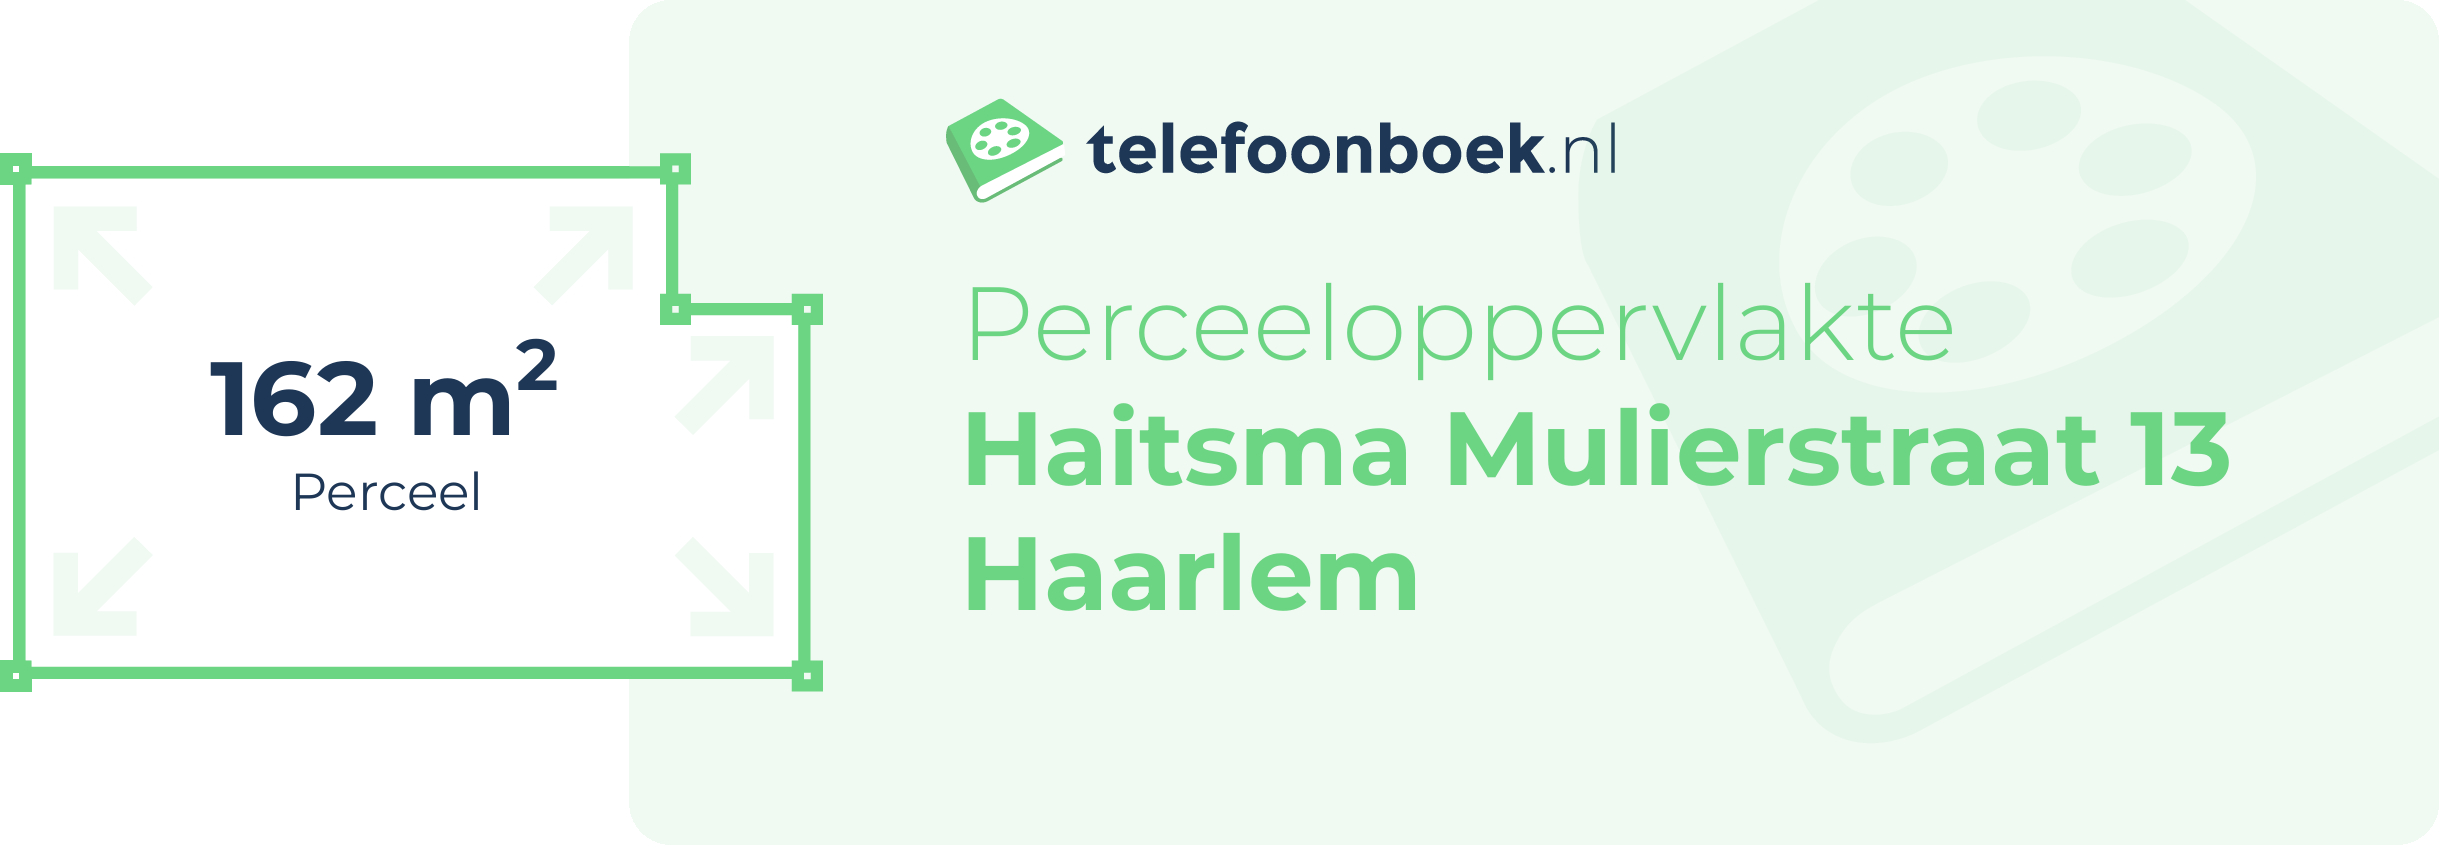 Perceeloppervlakte Haitsma Mulierstraat 13 Haarlem